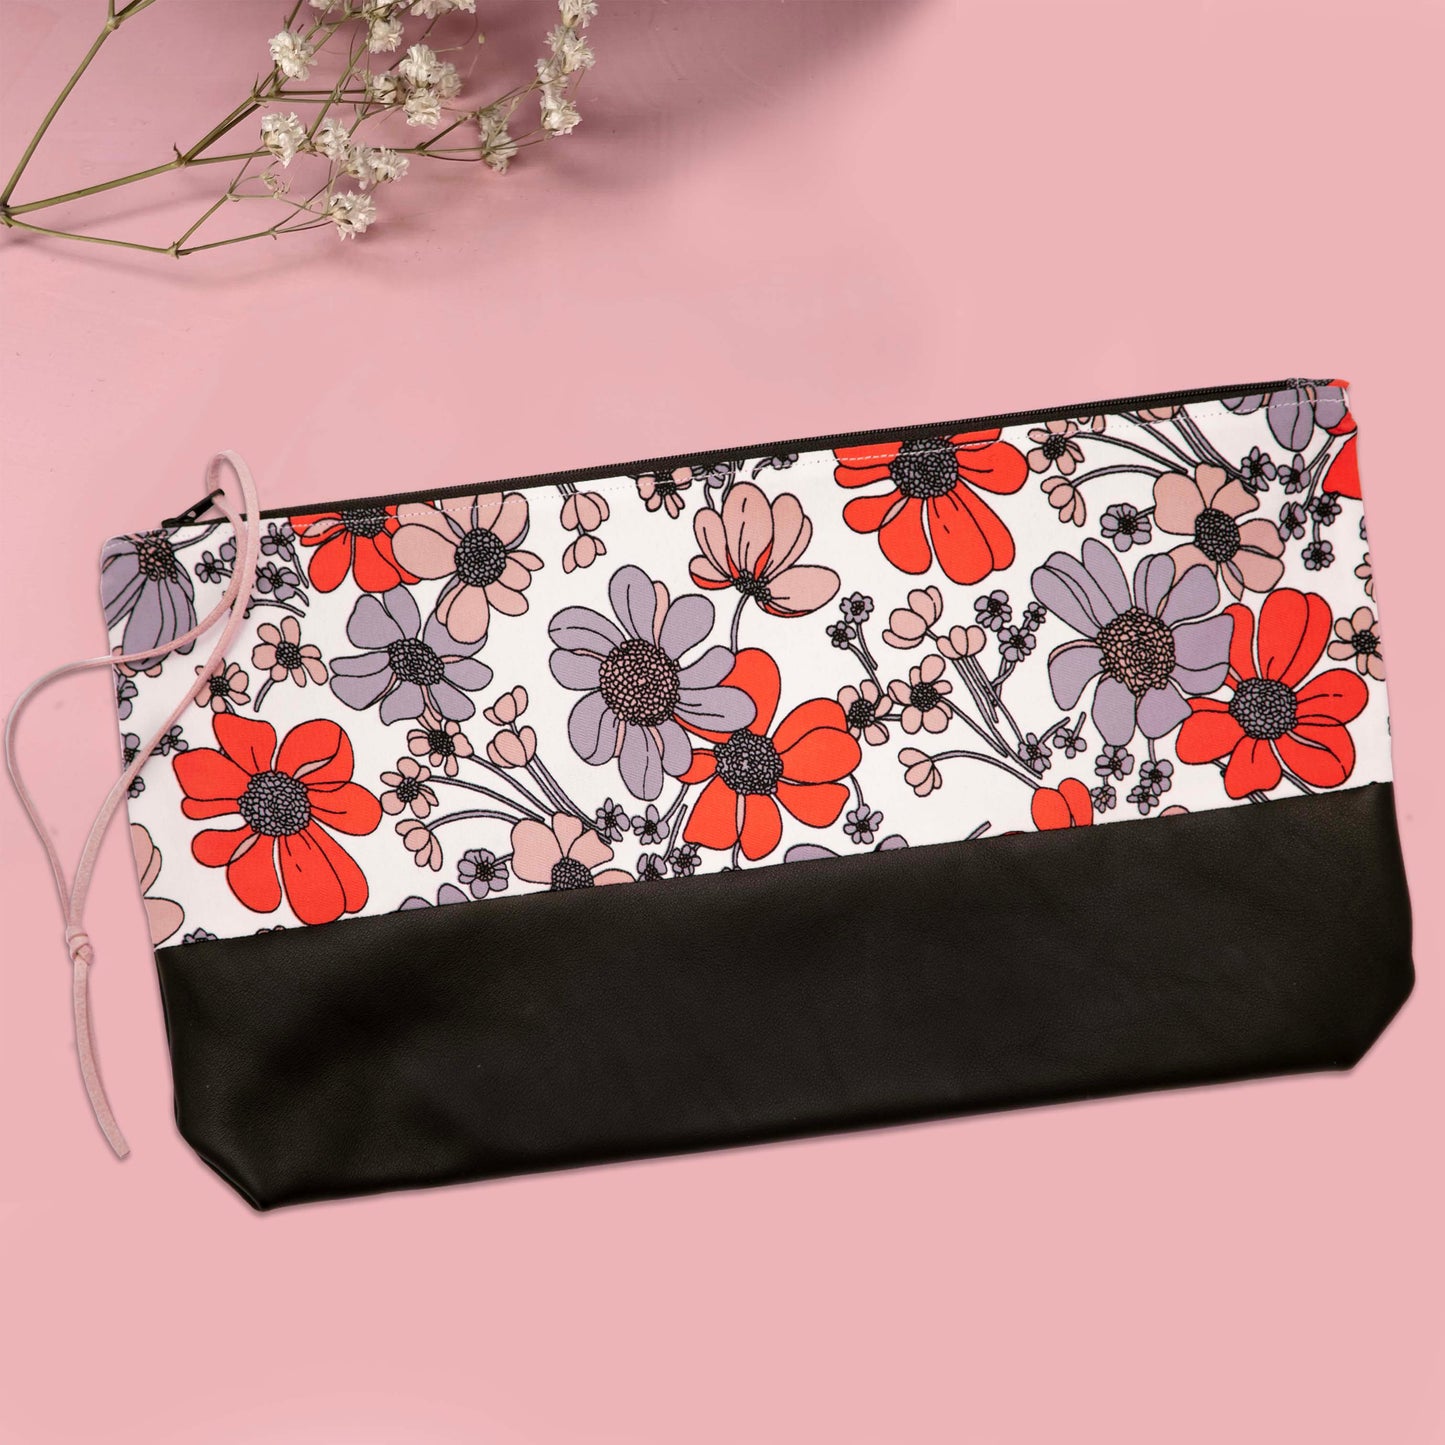 Daisy Chain Floral + Leather Clutch Bag, Handmade